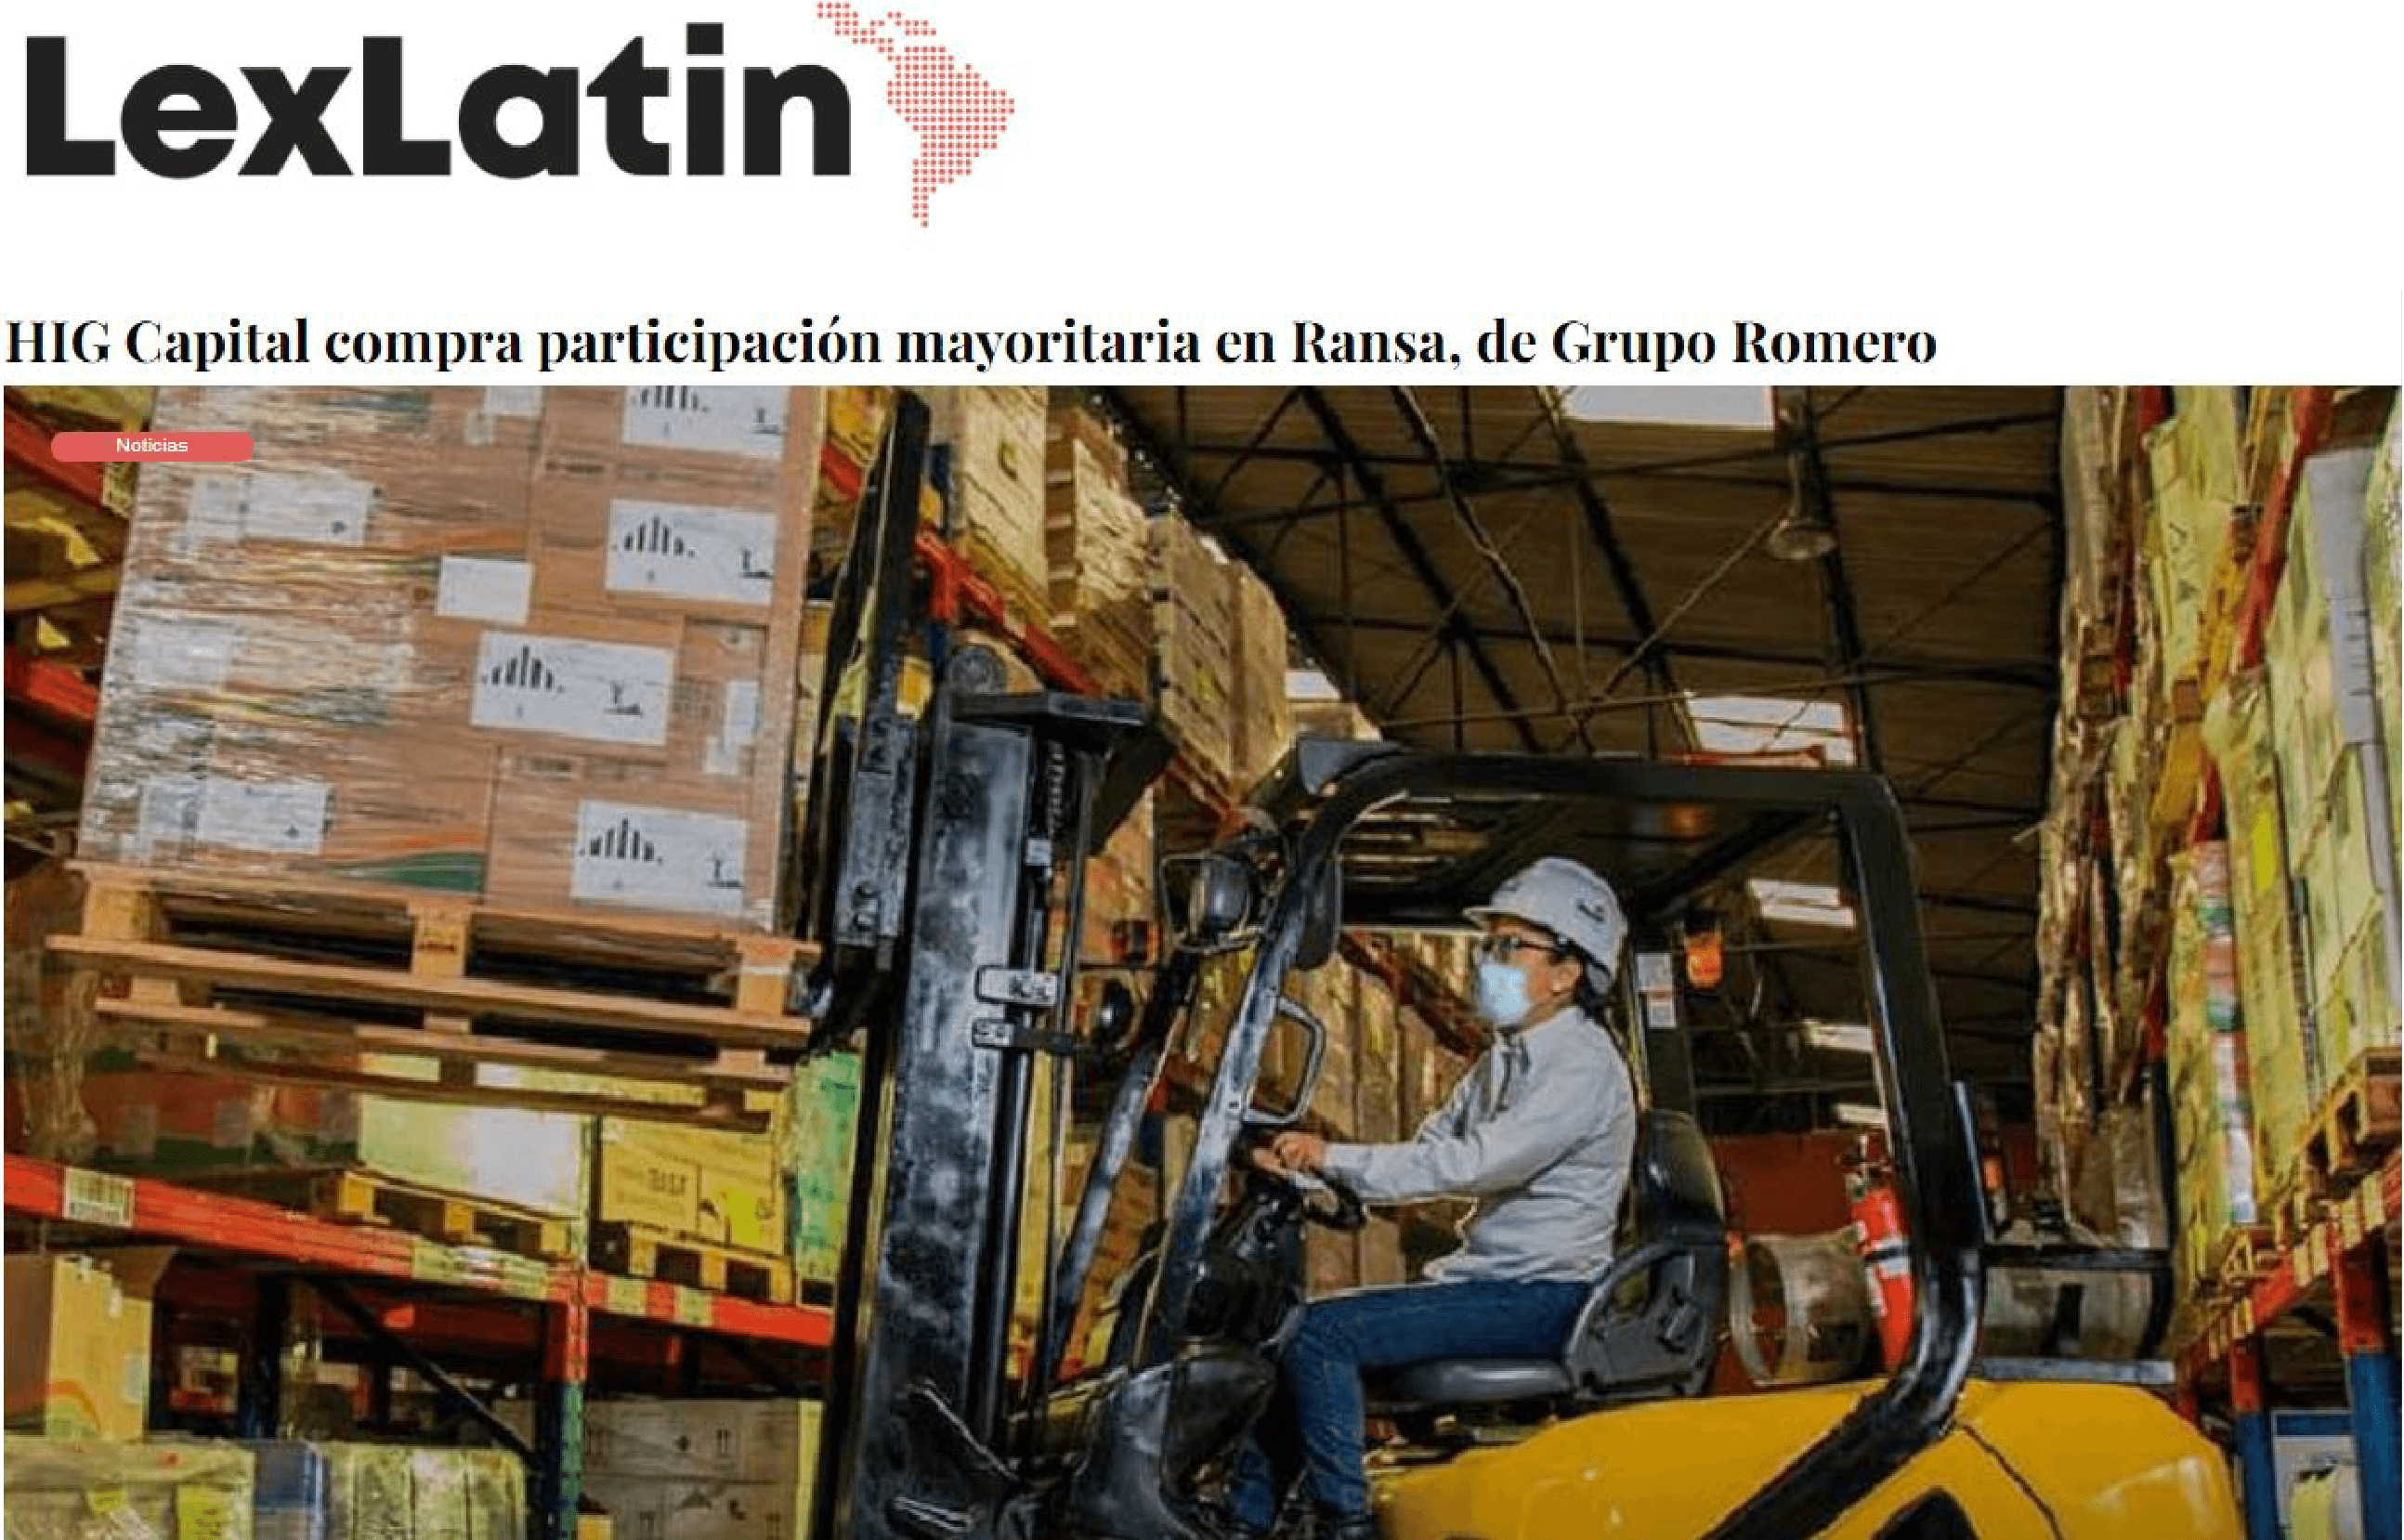 LexLatin - HIG Capital Becomes a Majority Shareholder in Ransa, from Grupo Romero - CorralRosales - Lawyers Ecuador